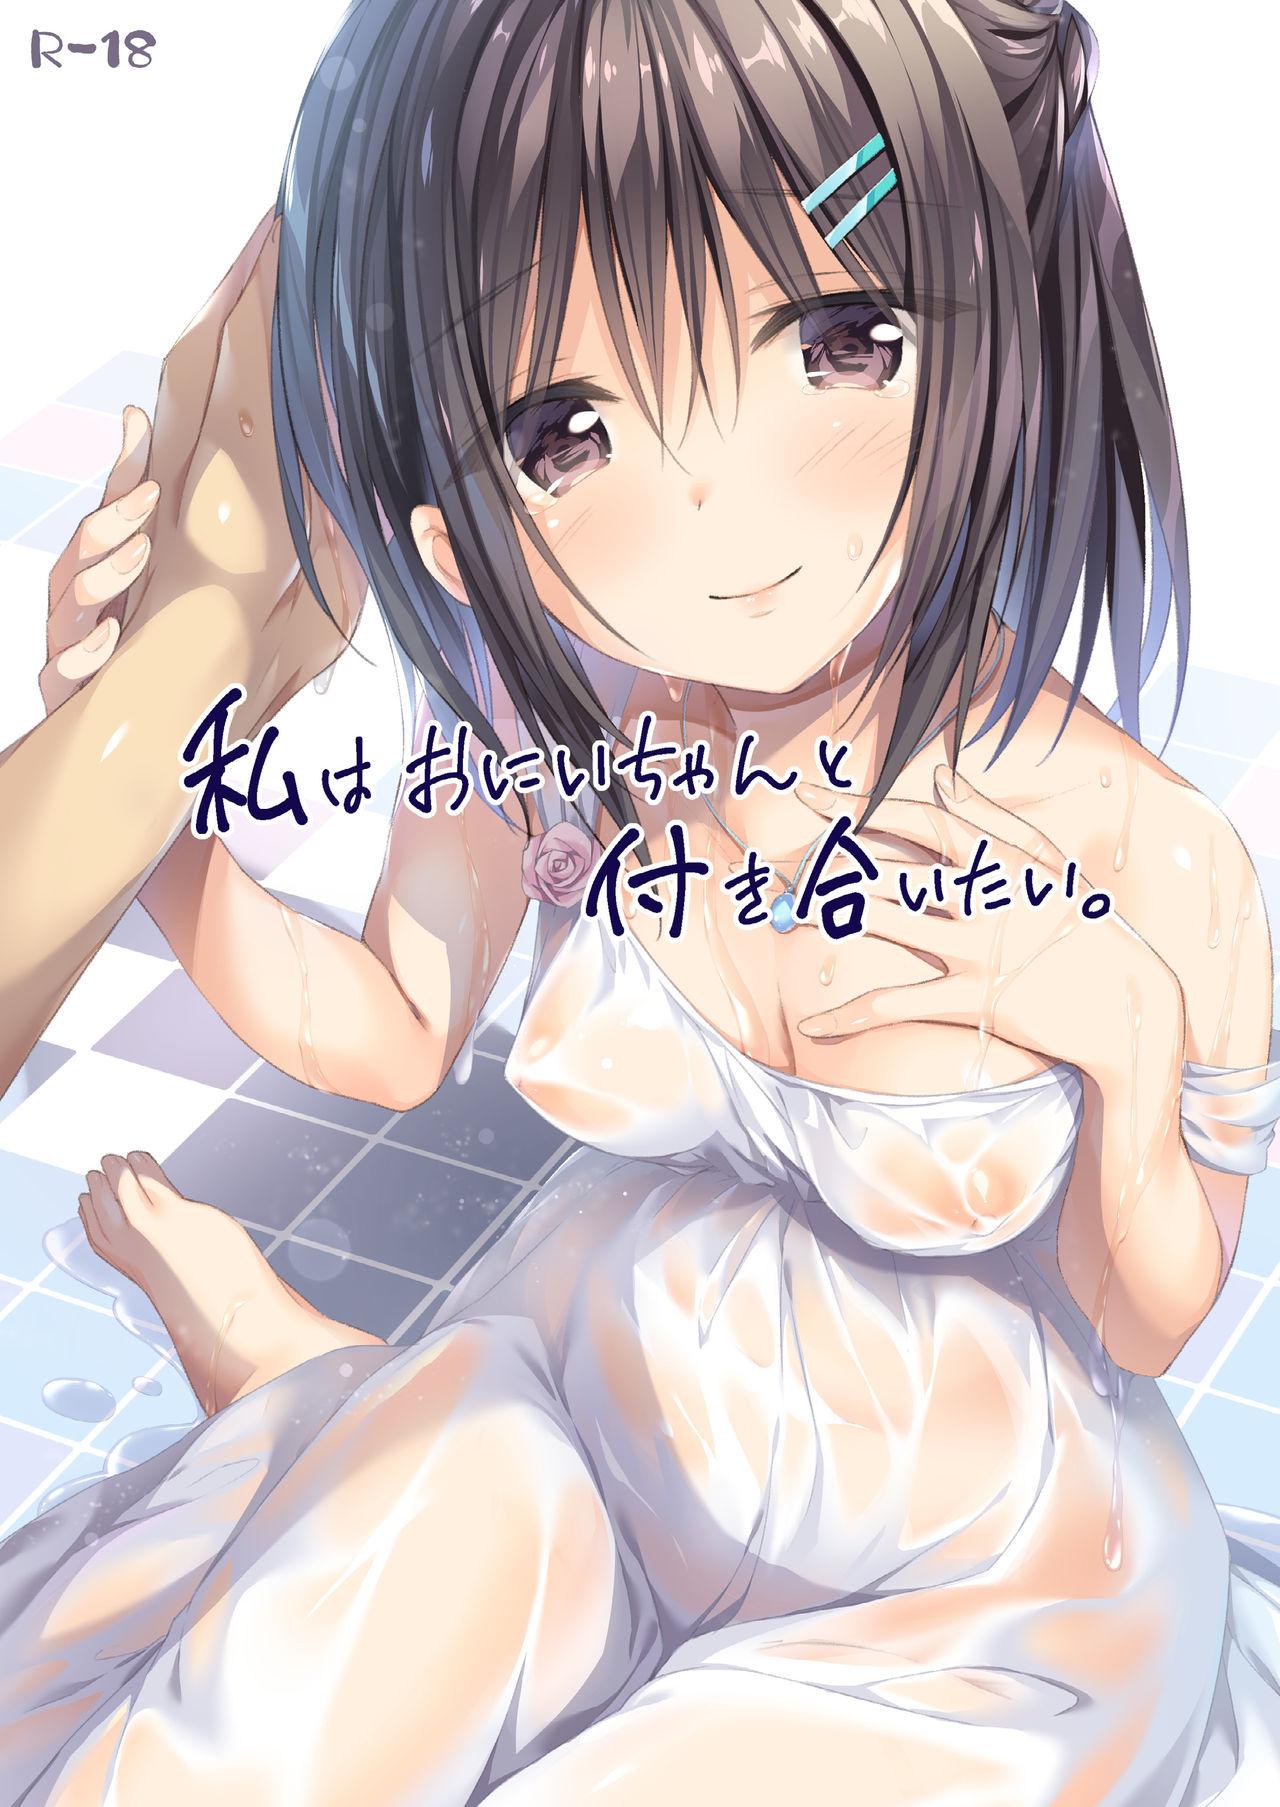 Skinny Watashi wa Onii-chan to Tsukiaitai. - Original Perverted - Page 1